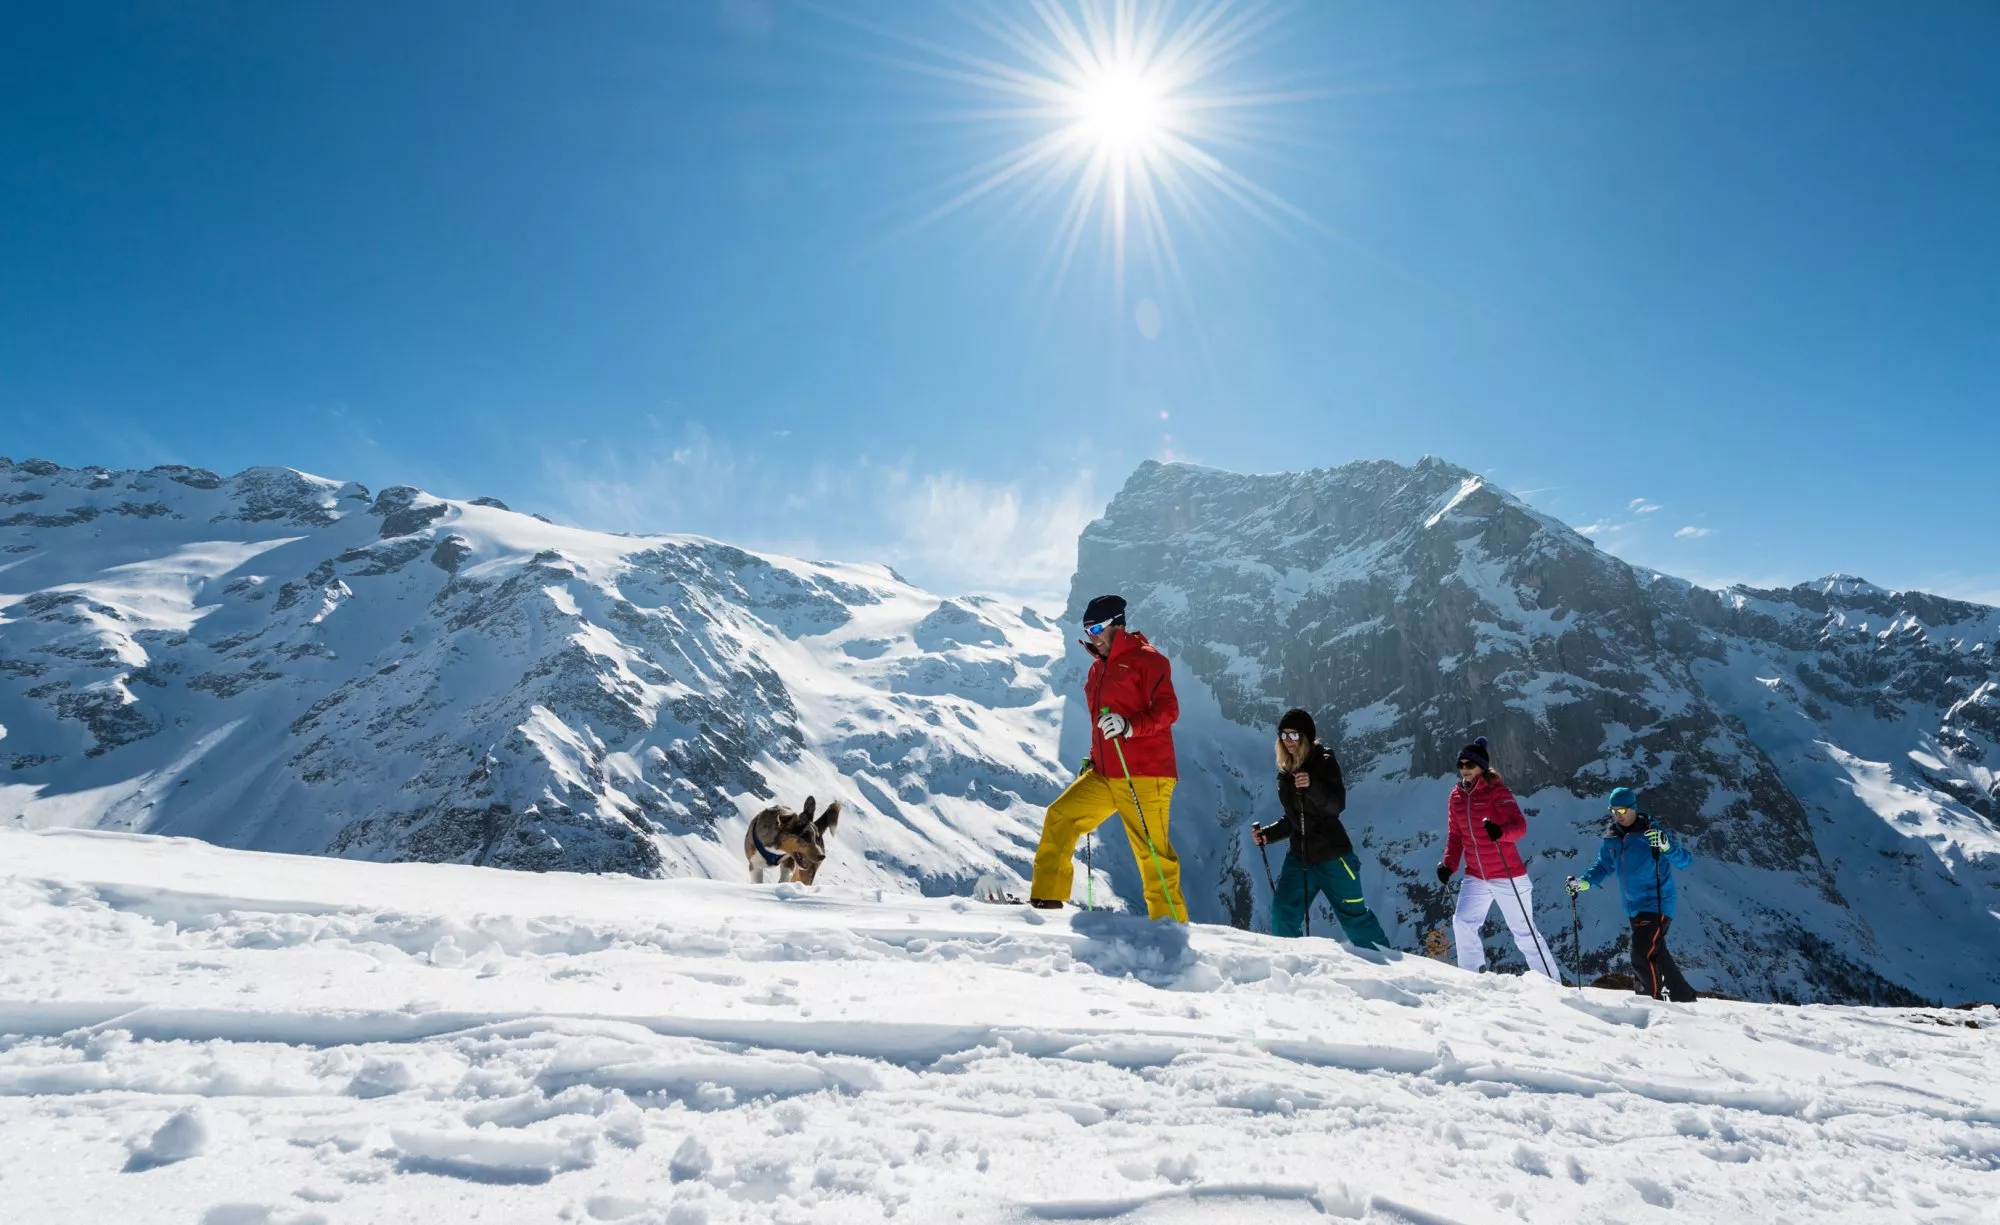 Adventure Engelberg in Switzerland, Europe | Snowboarding,Skiing - Rated 4.1